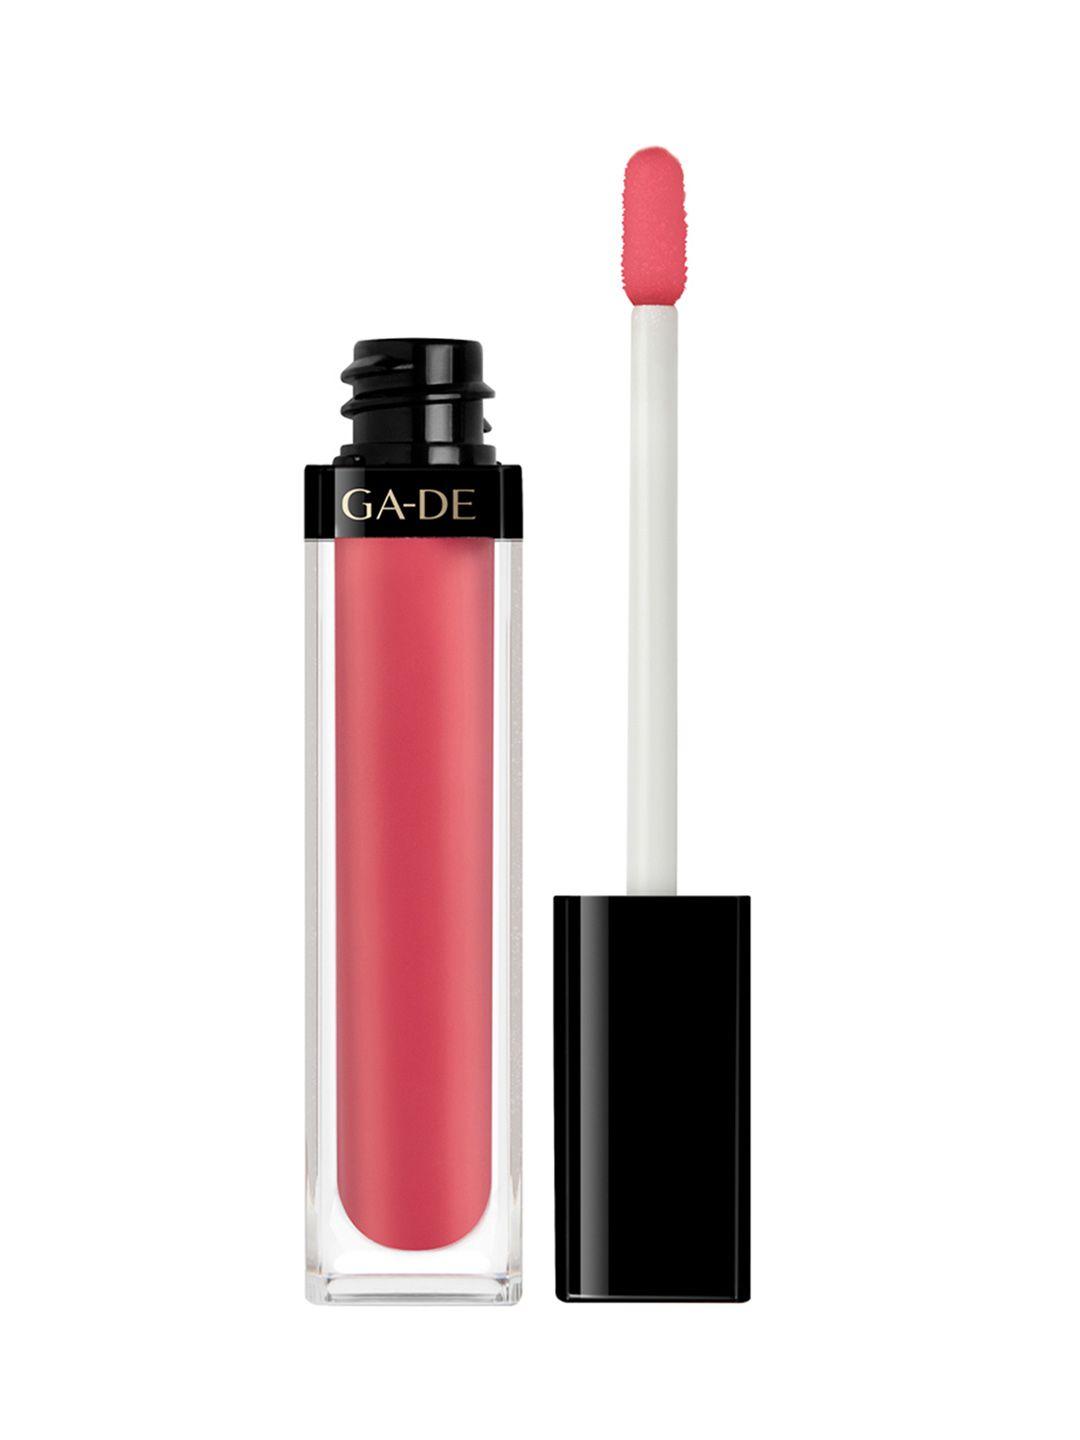 ga-de-long-lasting-&-moisturizing-crystal-lights-lip-gloss-6ml---berry-light-821